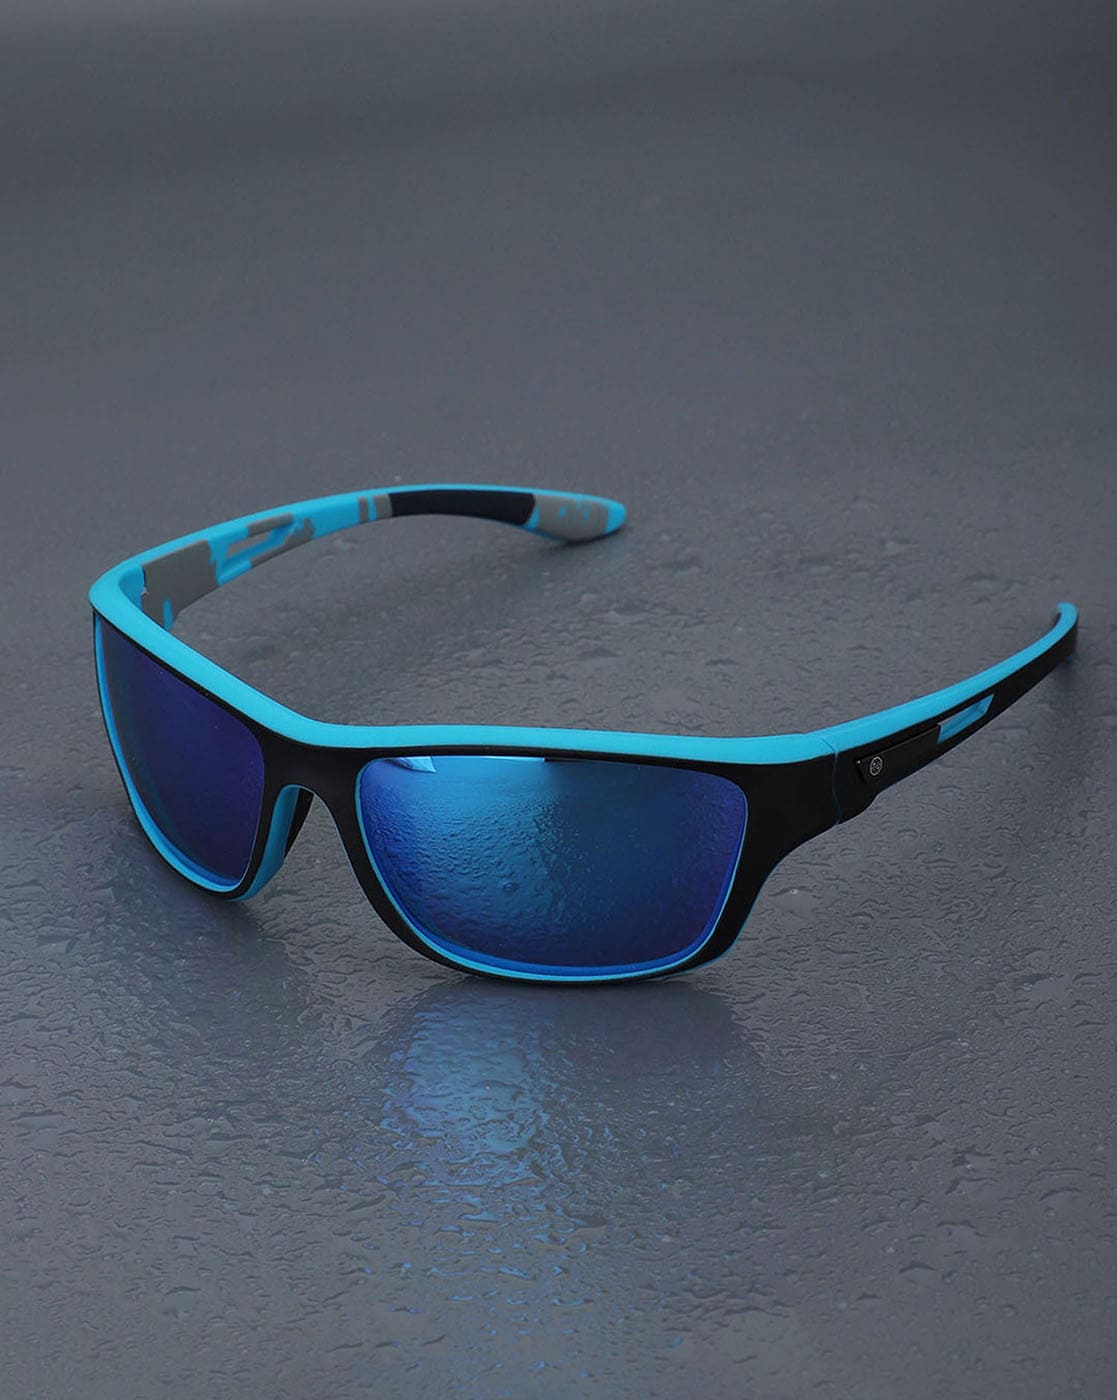 Buy Turquoise Sunglasses for Men by CARLTON LONDON Online